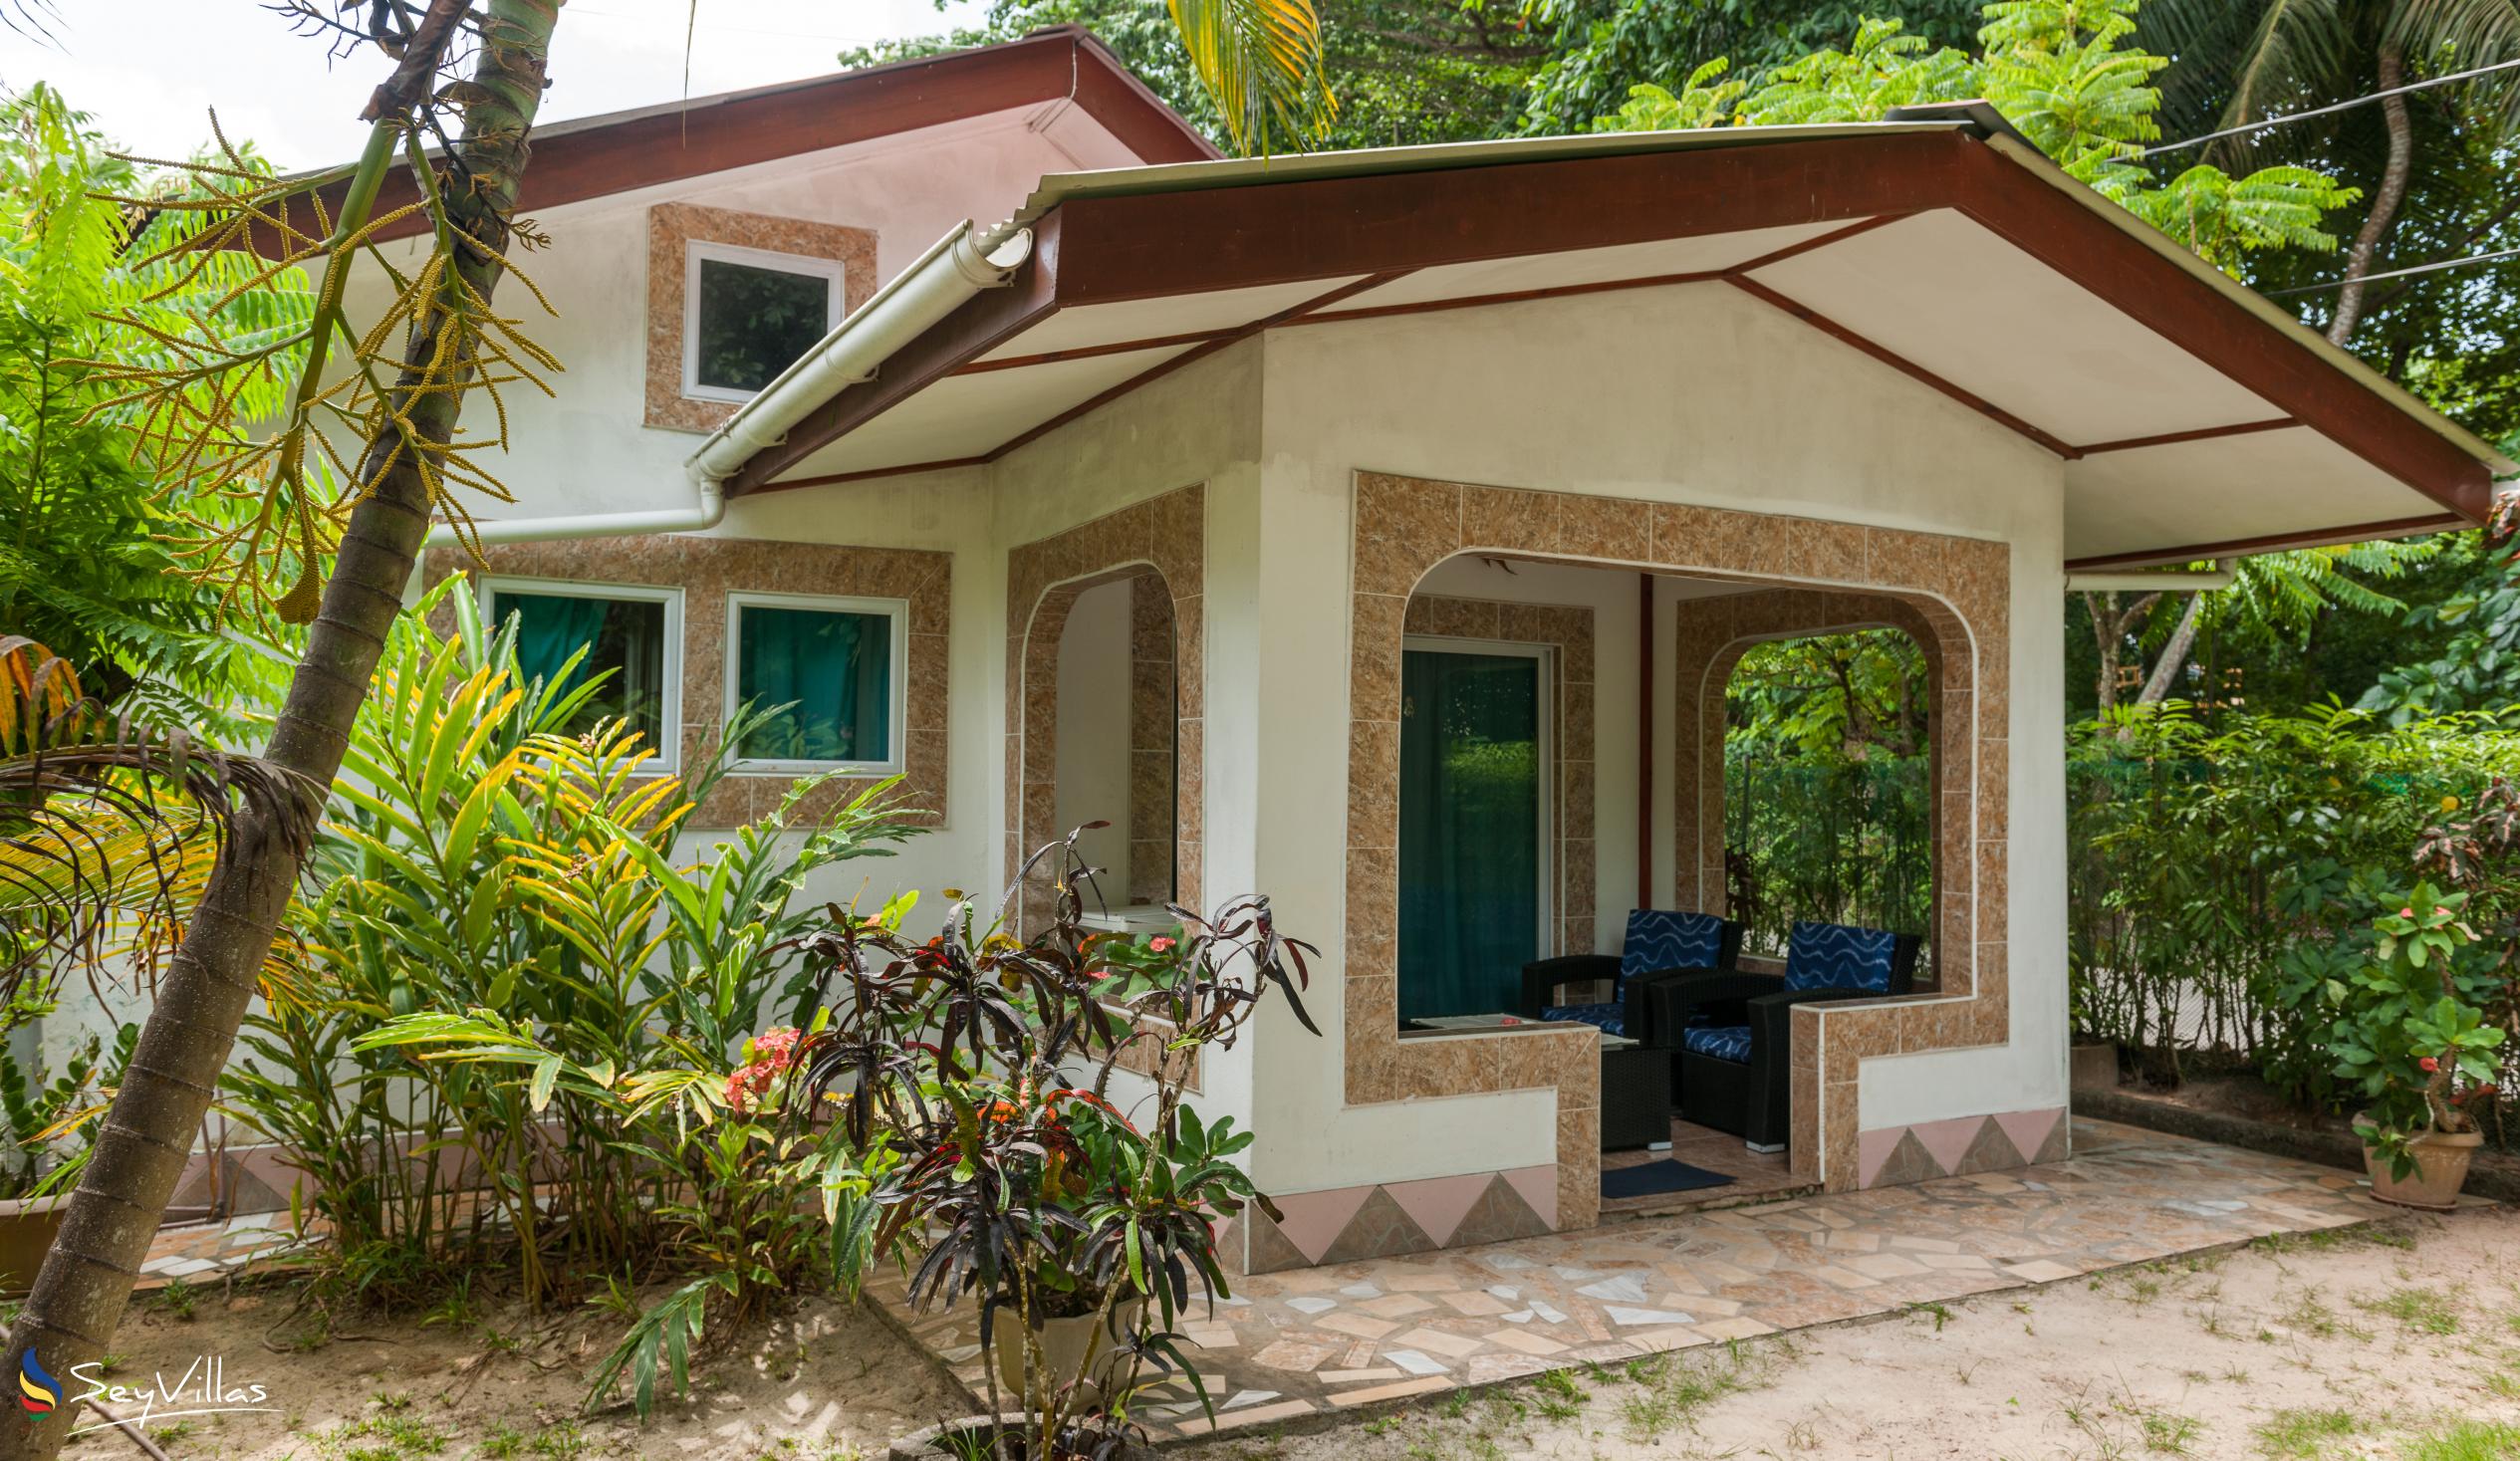 Foto 2: Rising Sun Guesthouse - Aussenbereich - La Digue (Seychellen)